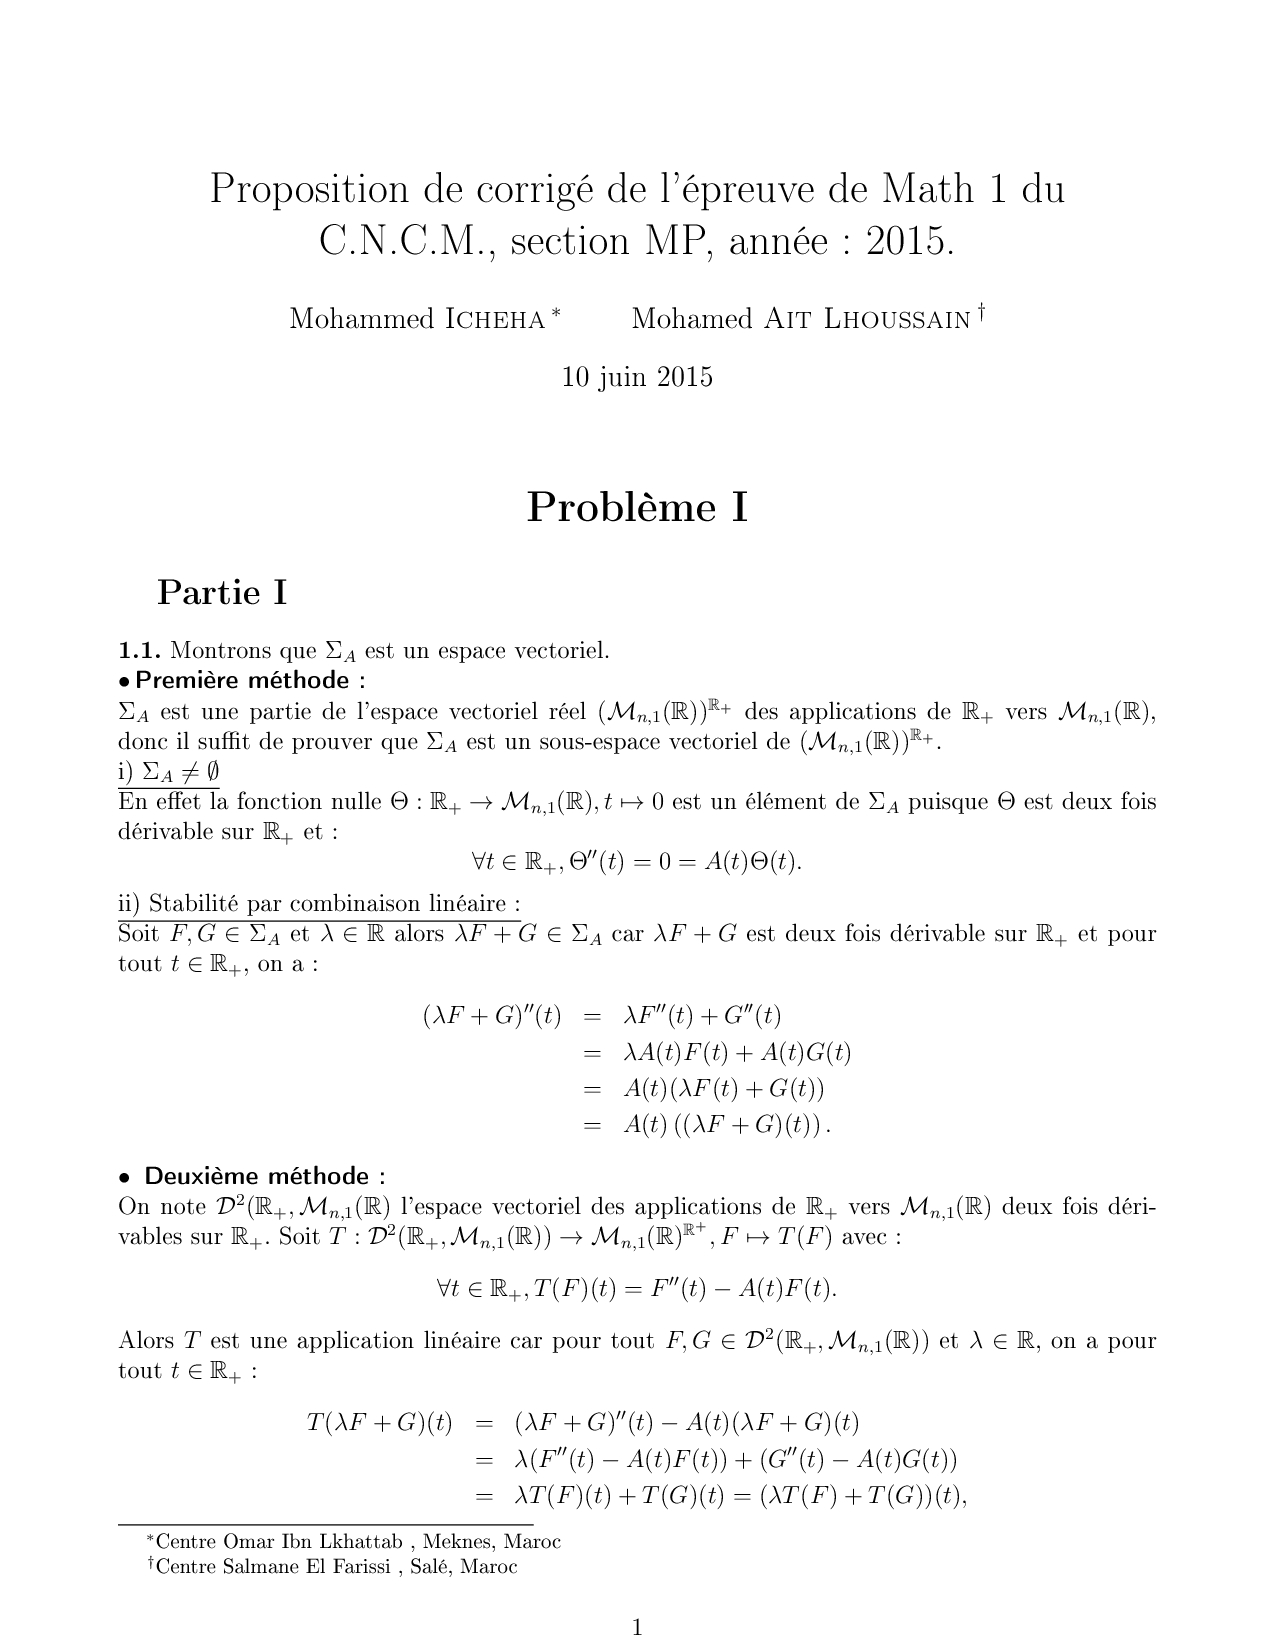 Cnc Mp 15 Maths 1 Corrige Alloschool